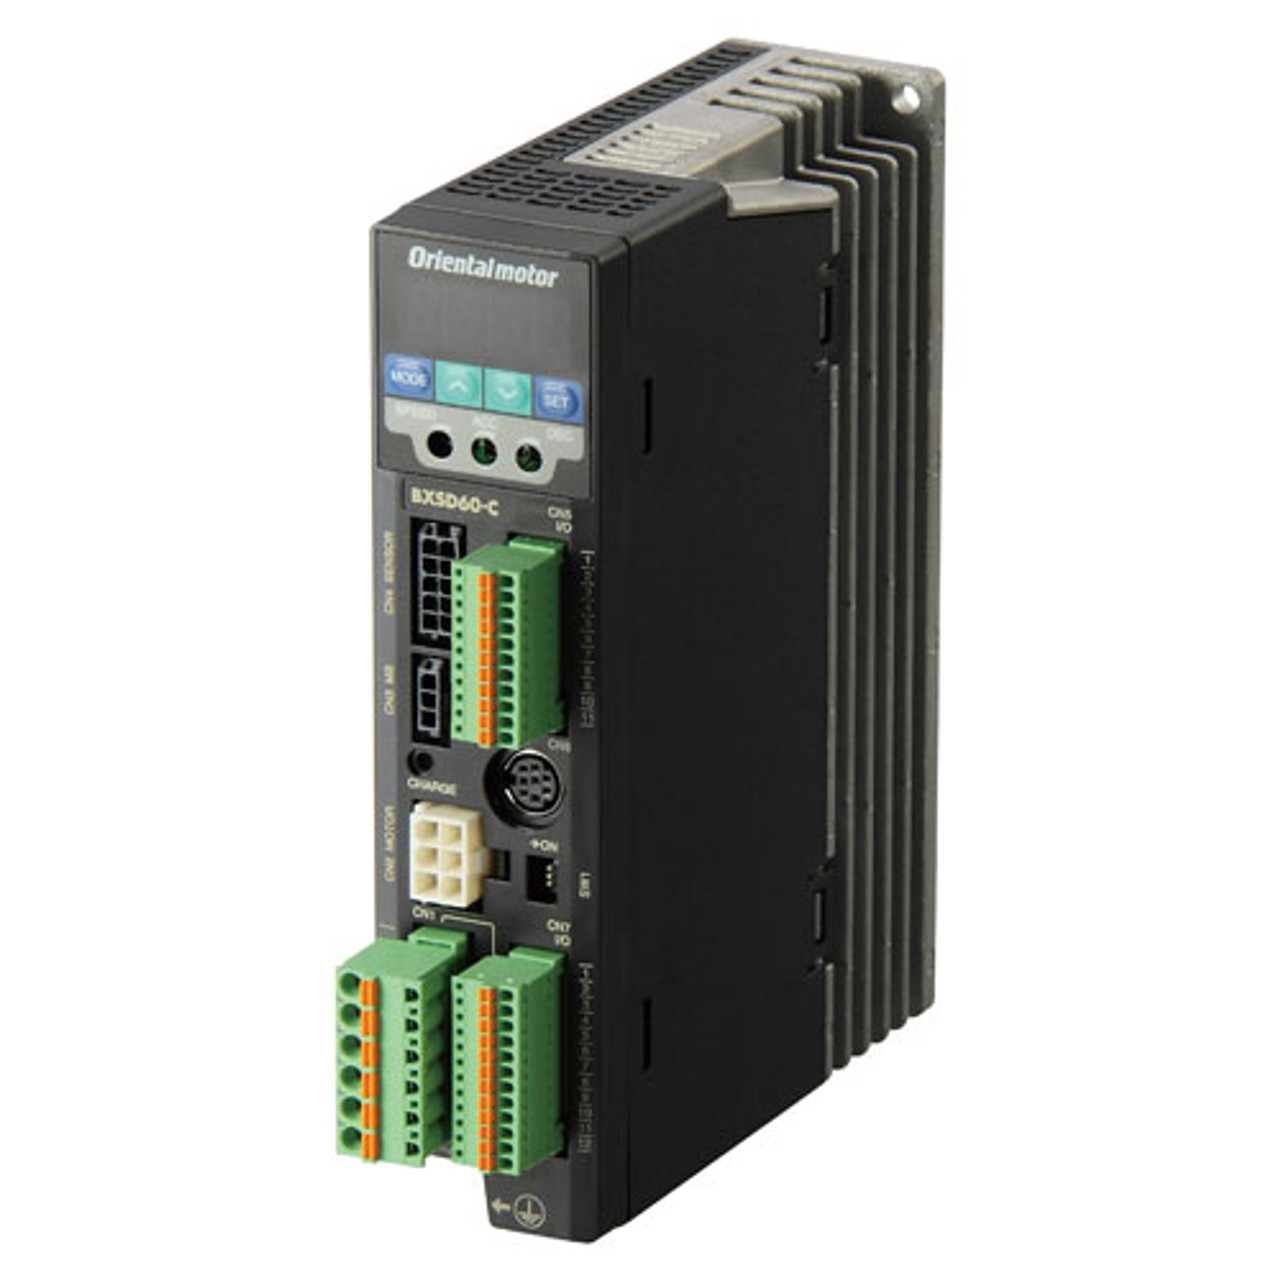 BXSD120-C - Product Image